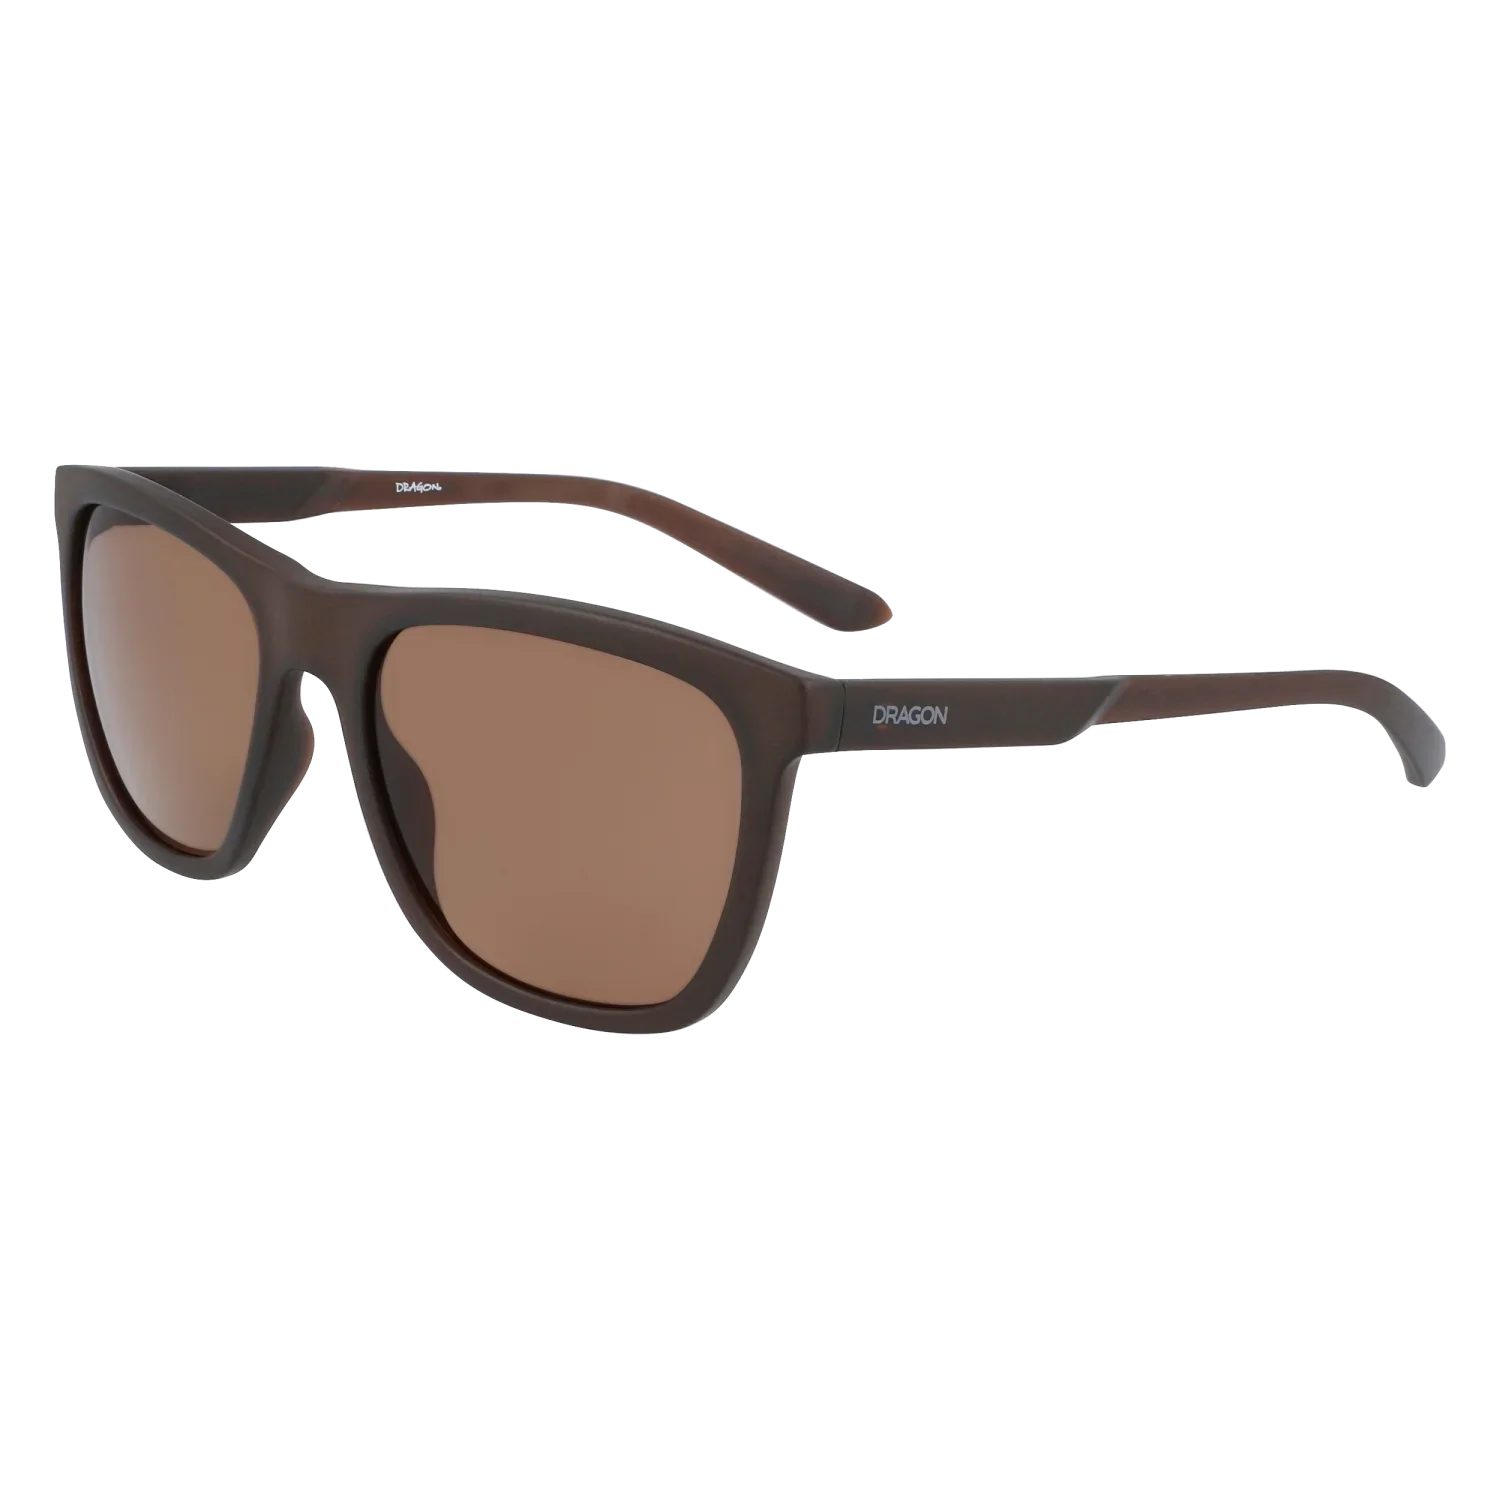 'Dragon Wilder LumaLens Sunglasses' in 'Matte Dark Brown Crystal W/ Lumalens Brown' colour